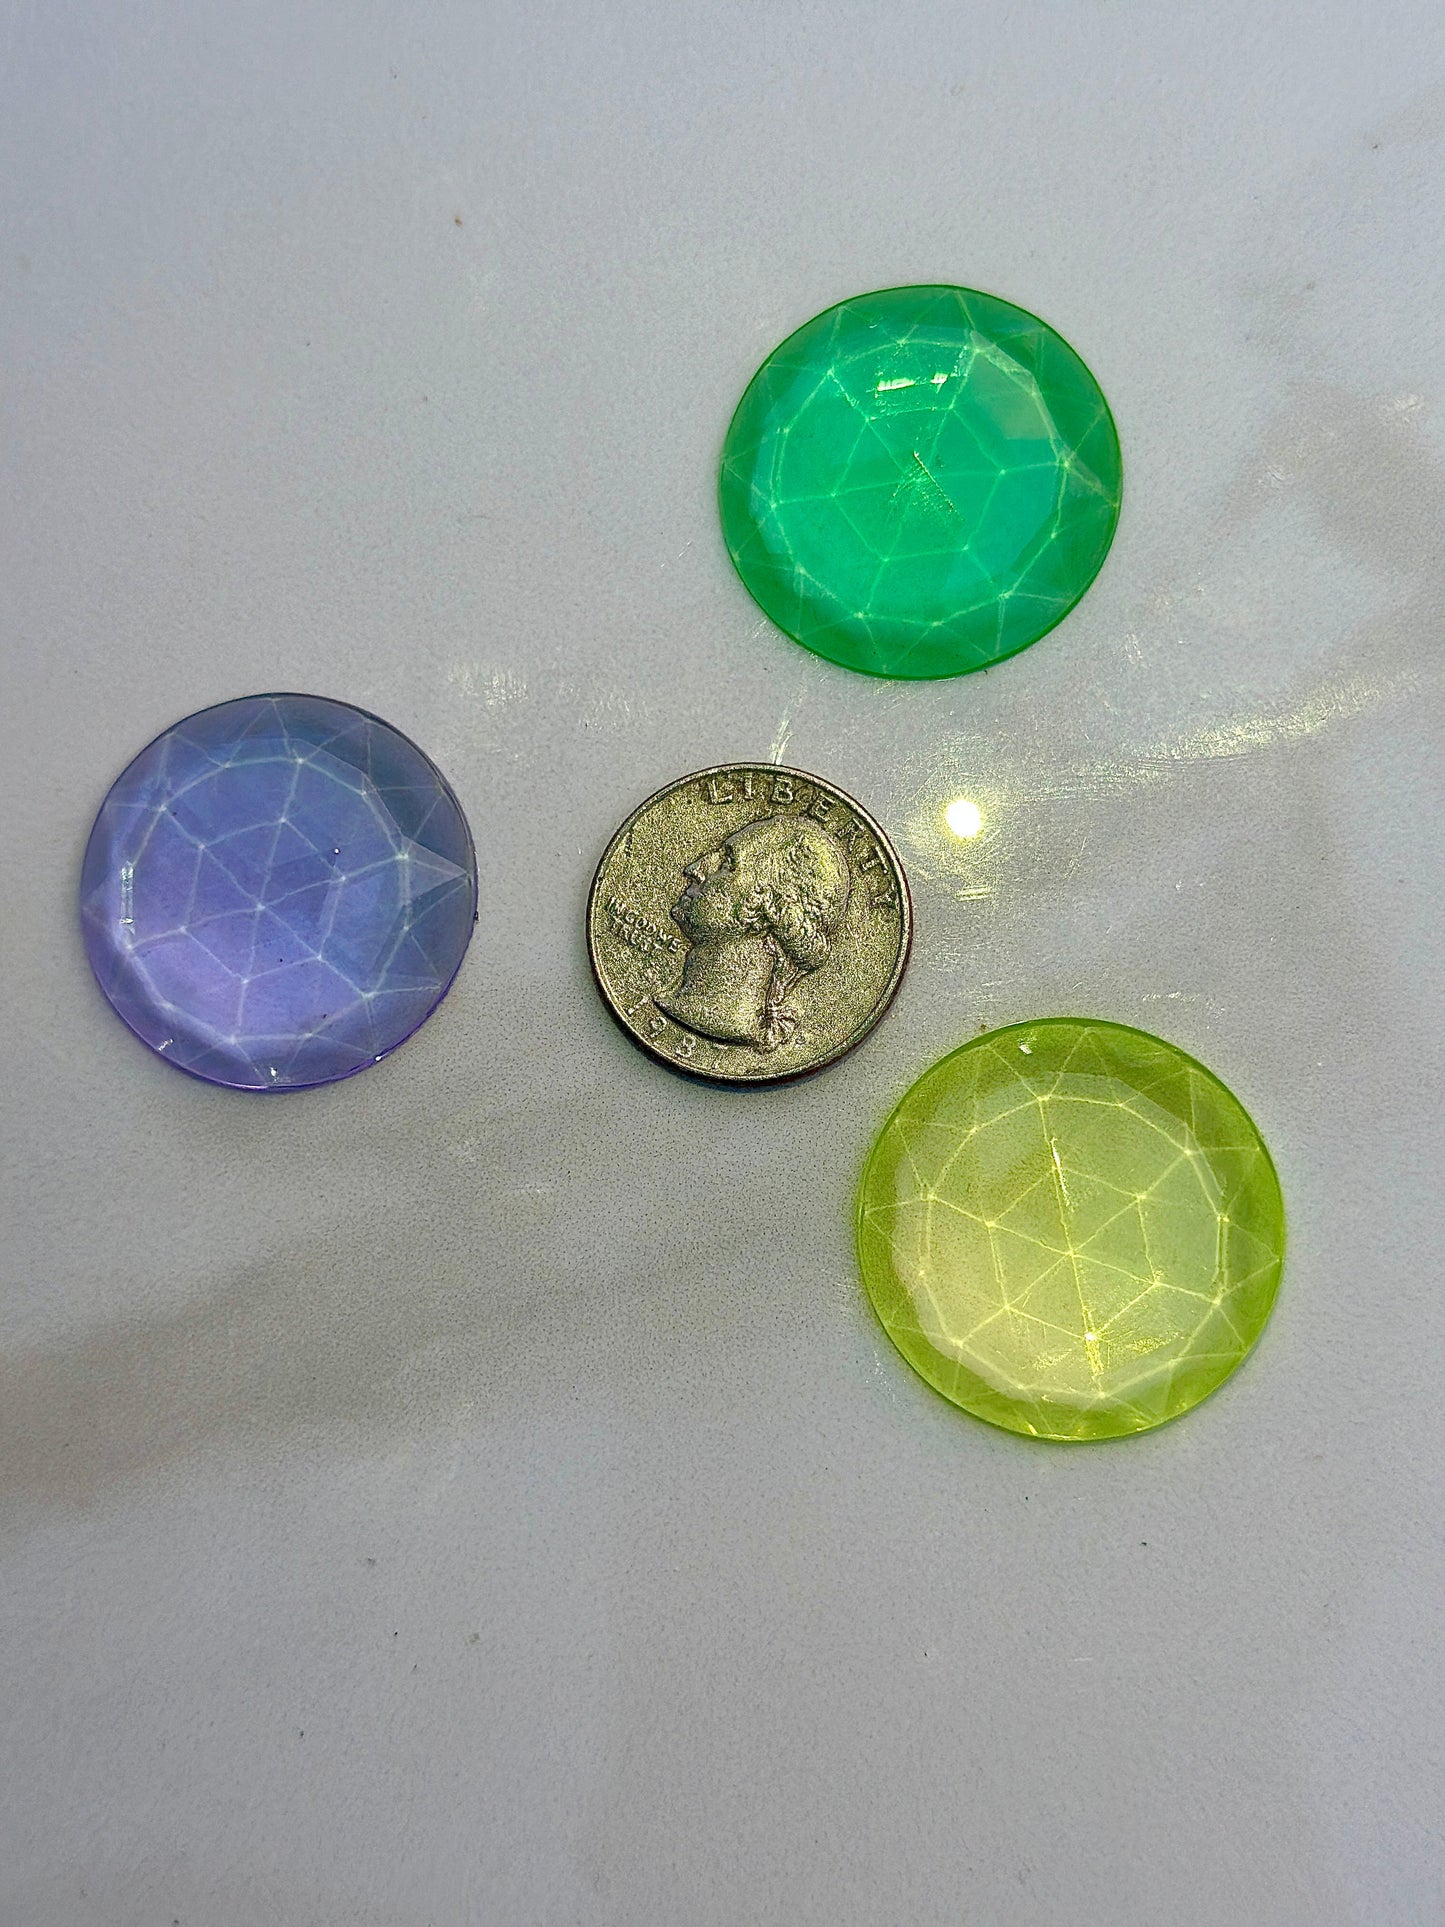 NEW 30mm Faceted Round Uranium/Depression/Vaseline Glass Jewel - UV Reactive - Glows Under Blacklight